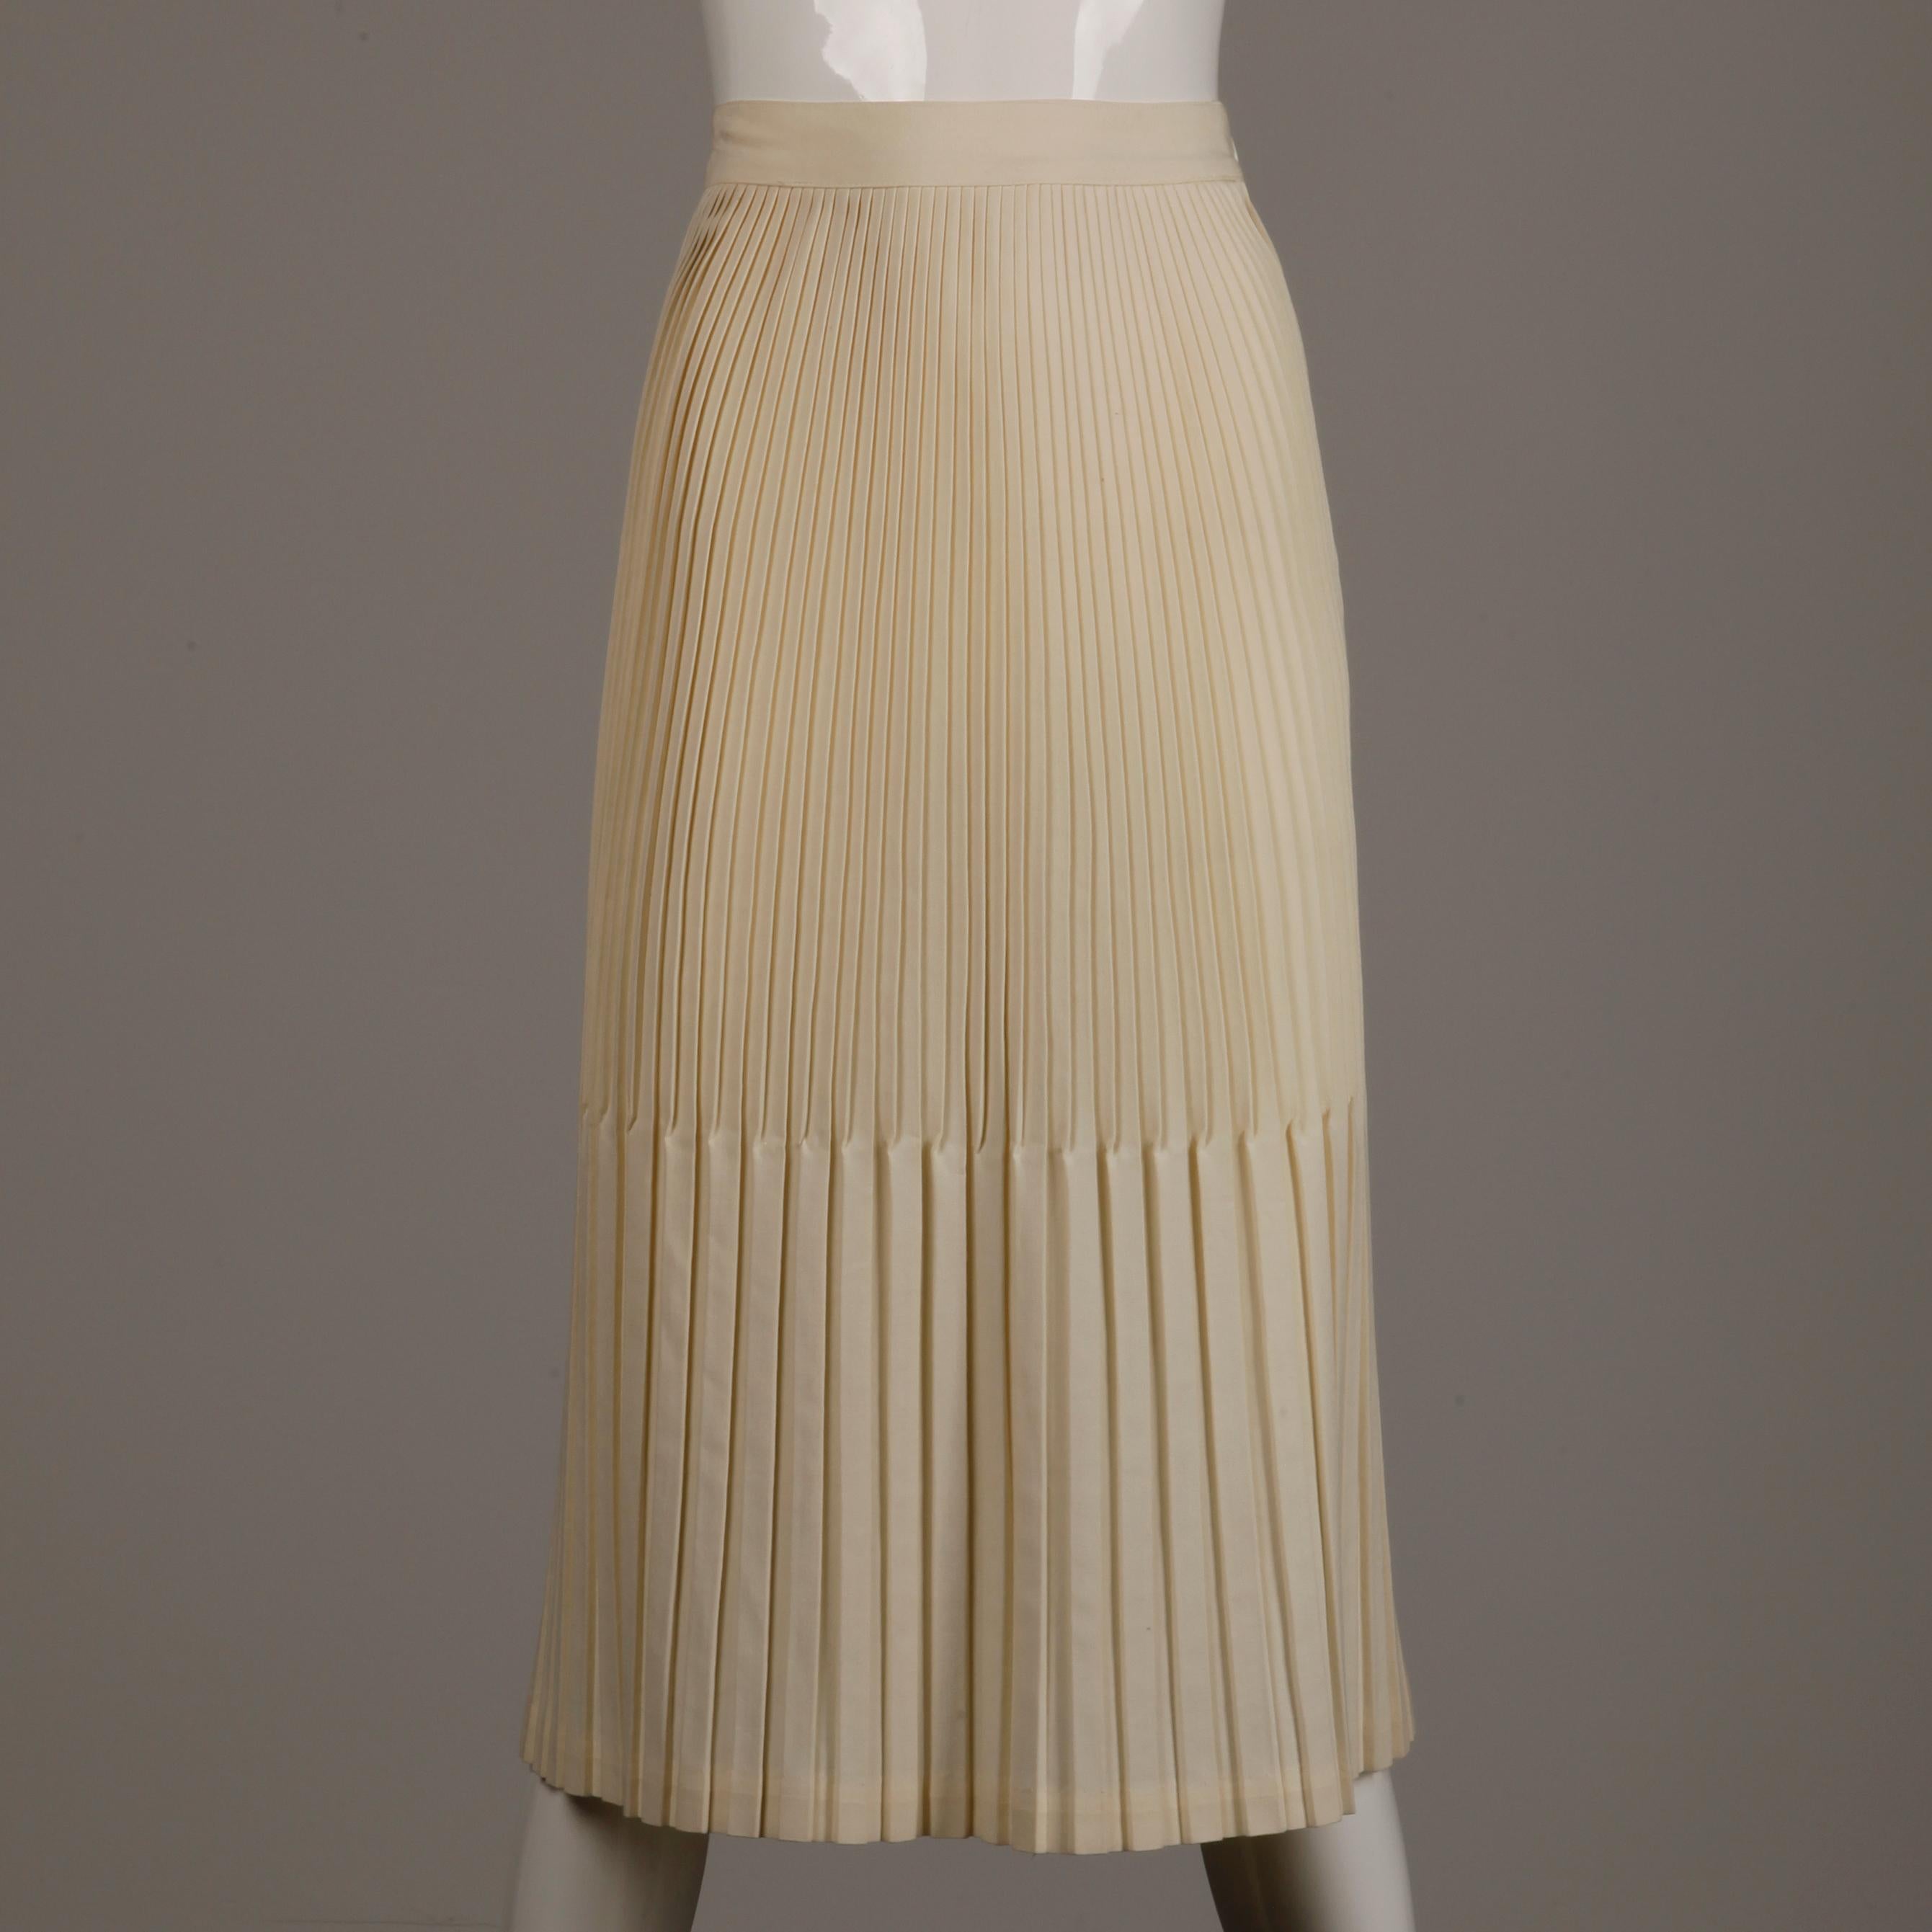 Brown 1940s Vintage Off White/ Cream Cotton Pleated High Waist Pencil Skirt